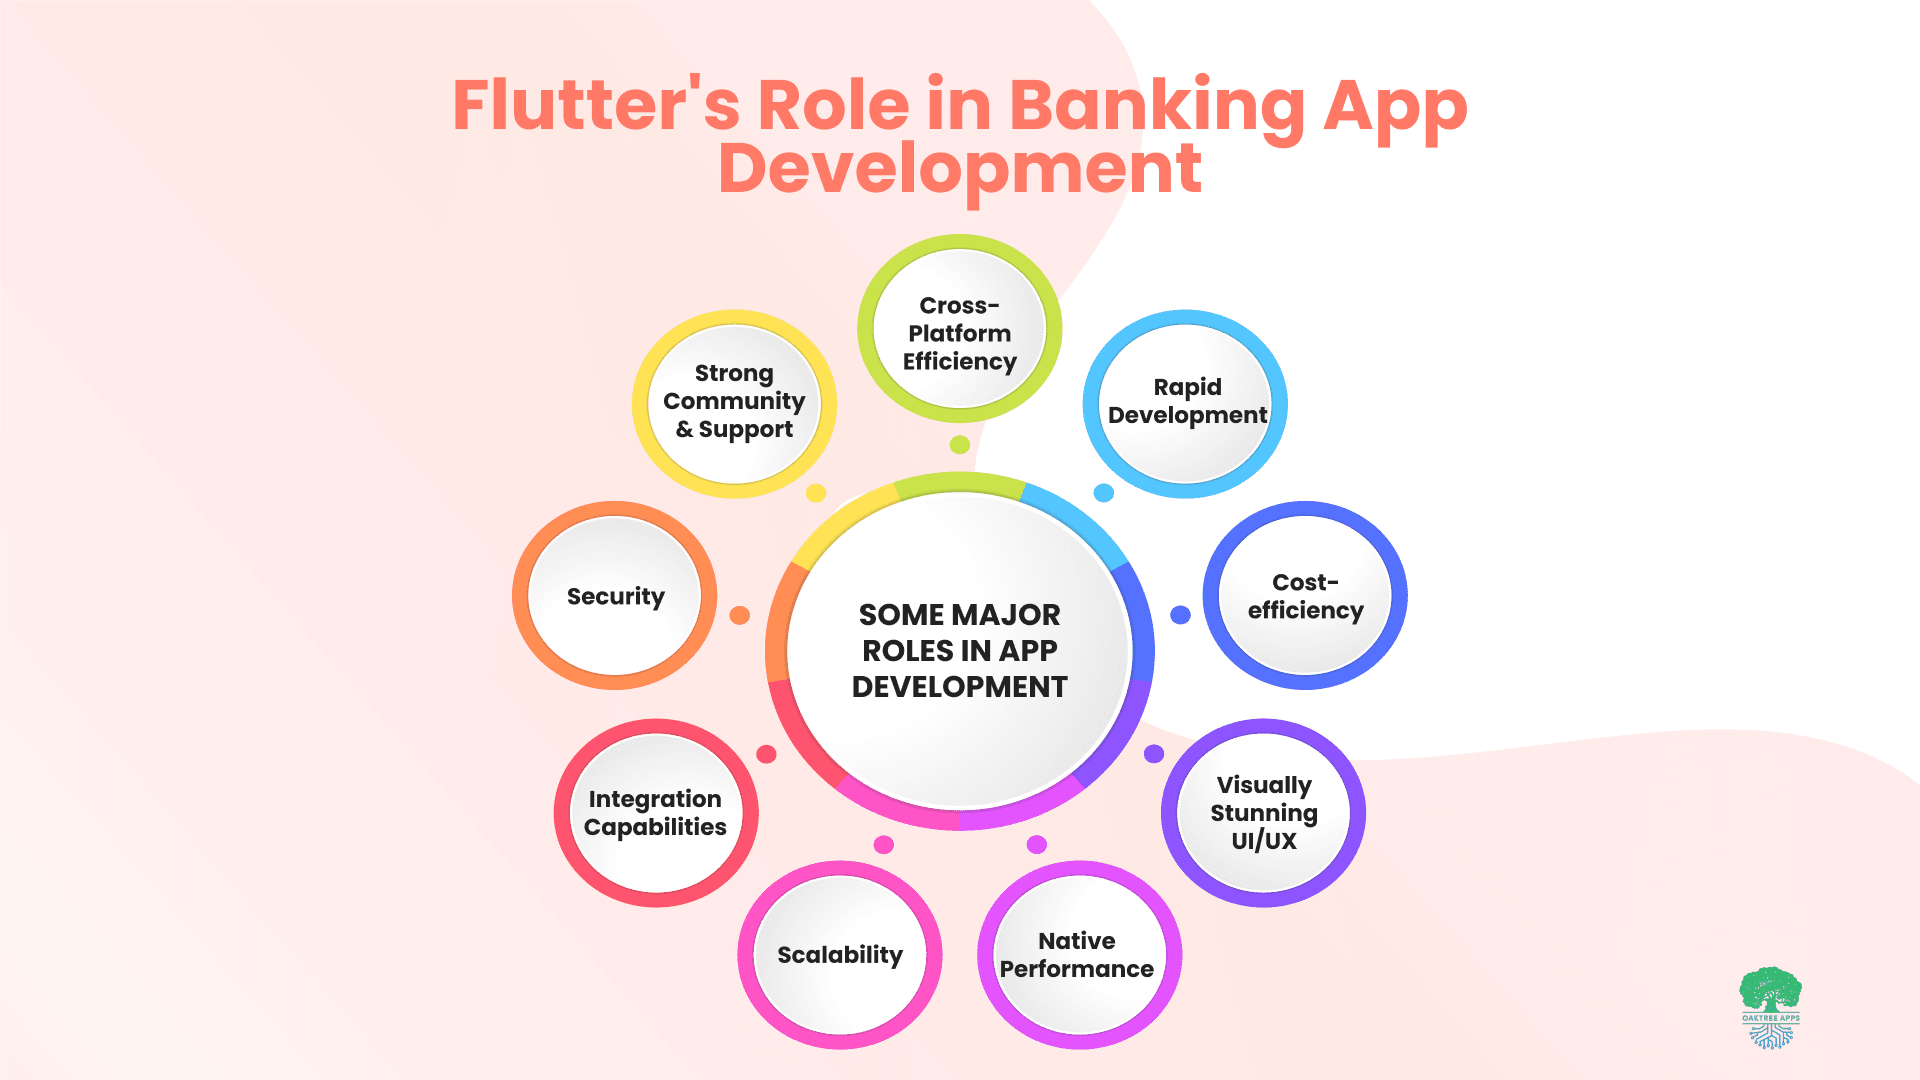 Flutters_Role_in_Banking_App_Development.png